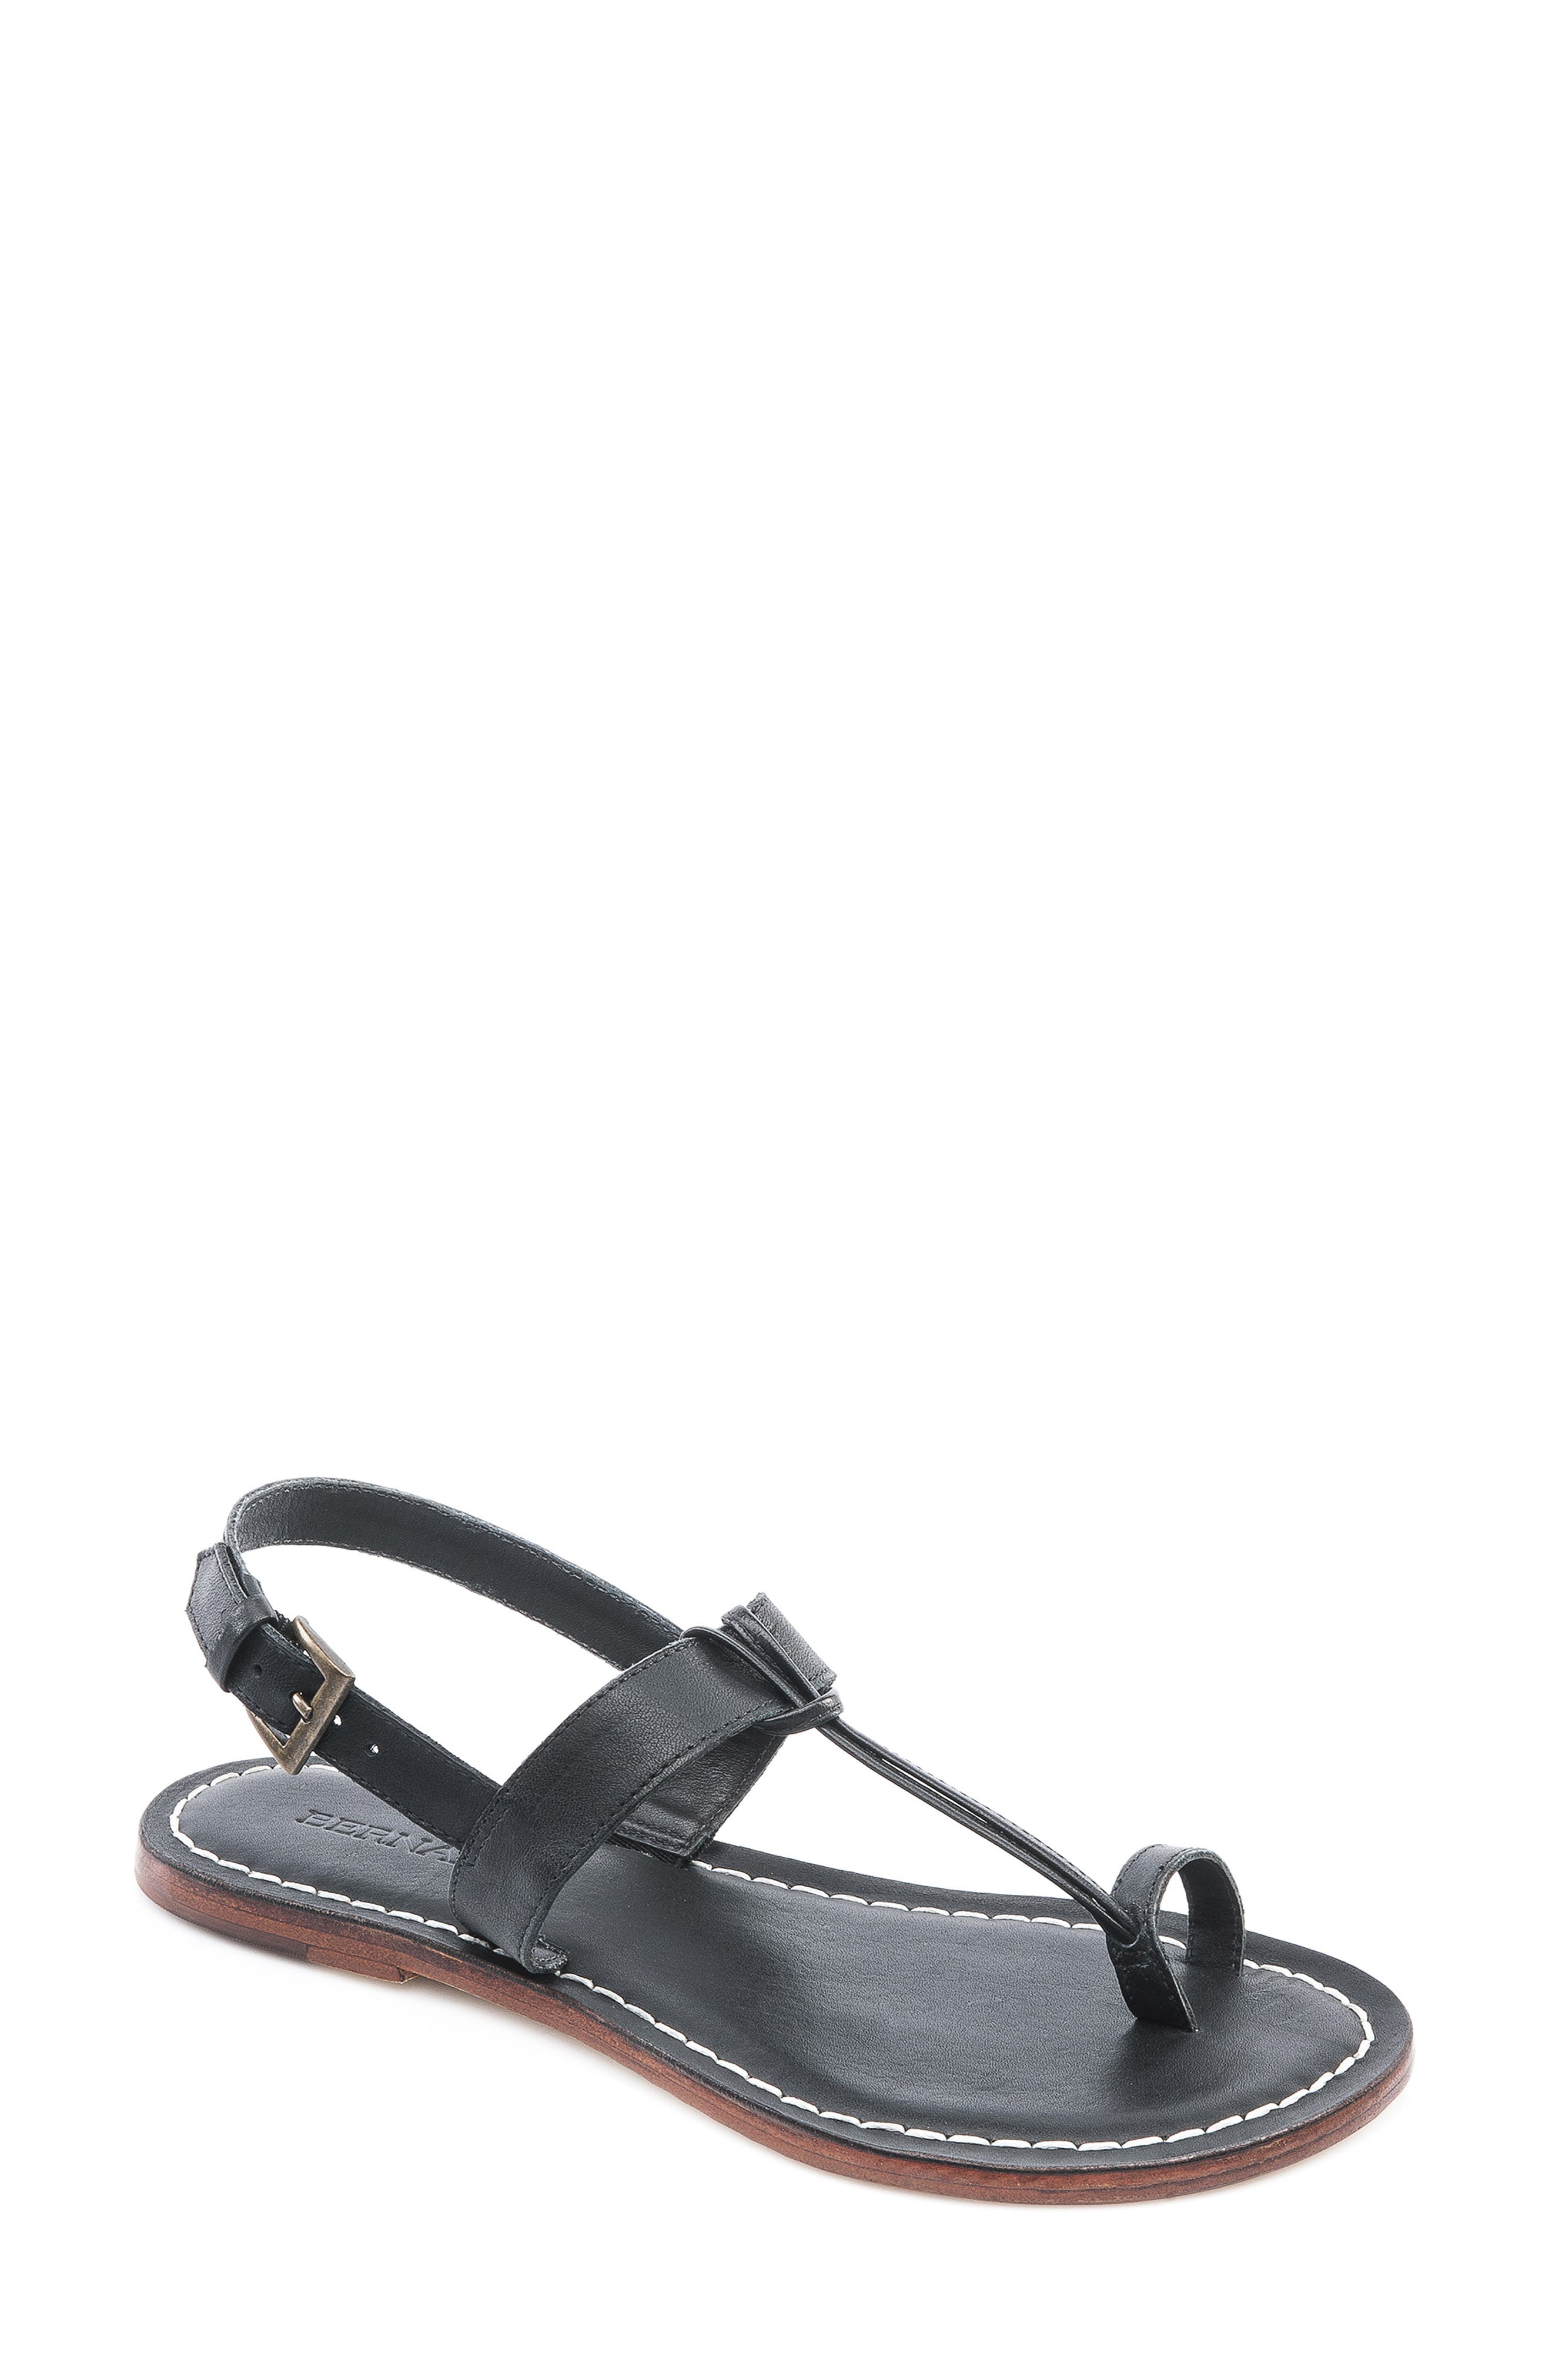 seychelles mavericks leather sandal